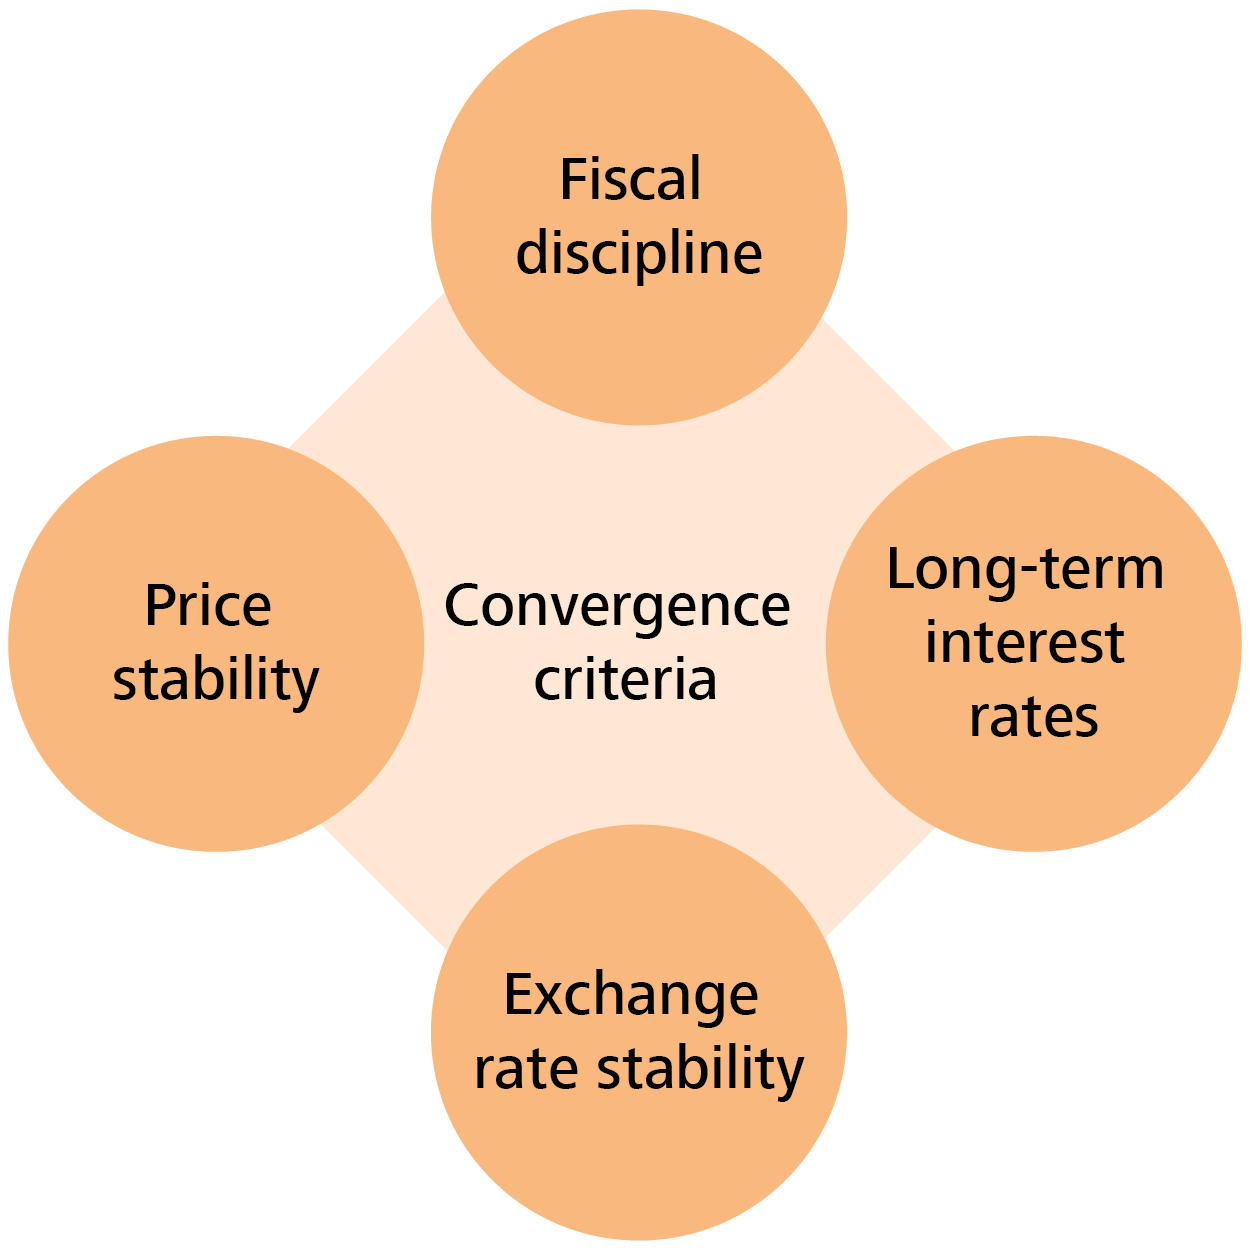 Convergence criteria